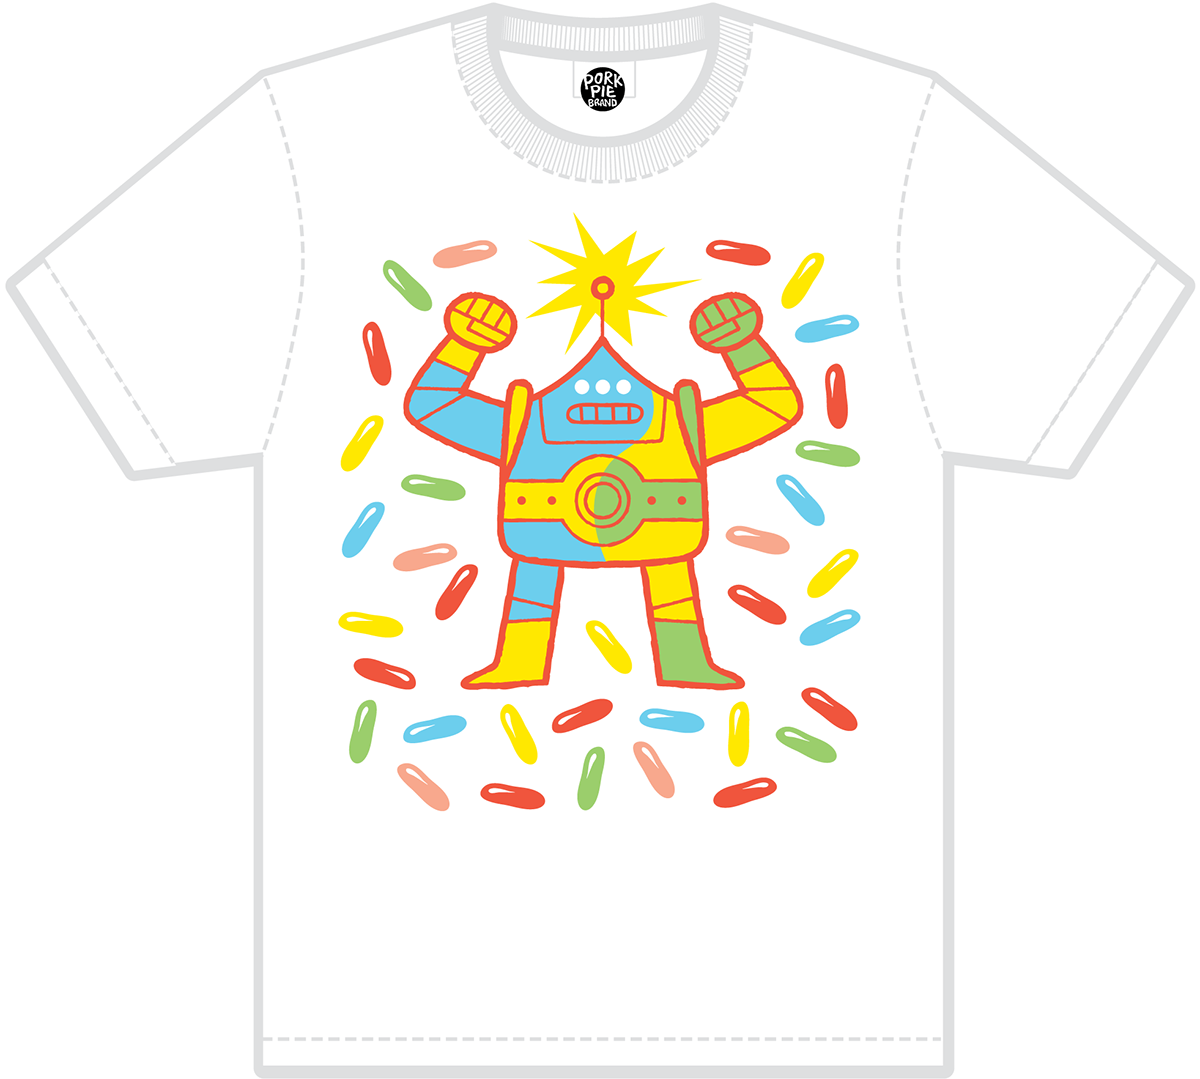 tshirt Clothing garment Retail Candy ice cream robot monster mutant